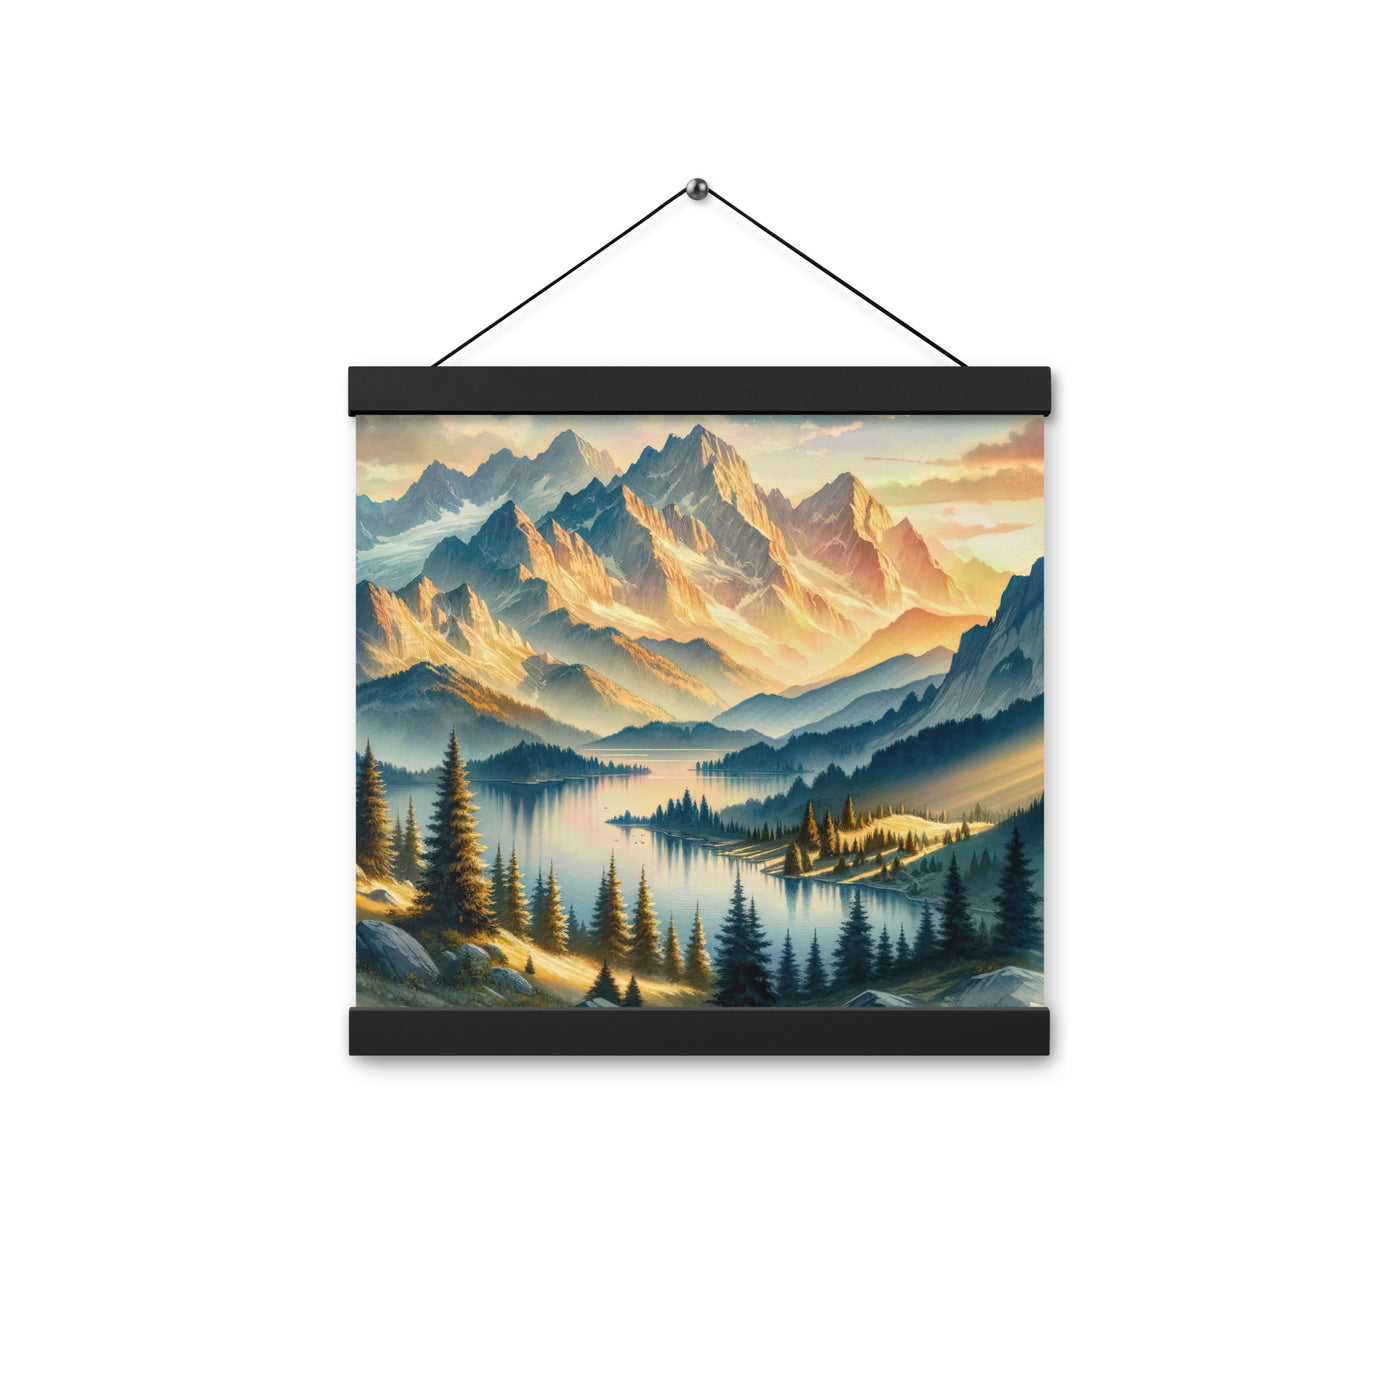 Aquarell der Alpenpracht bei Sonnenuntergang, Berge im goldenen Licht - Premium Poster mit Aufhängung berge xxx yyy zzz 30.5 x 30.5 cm